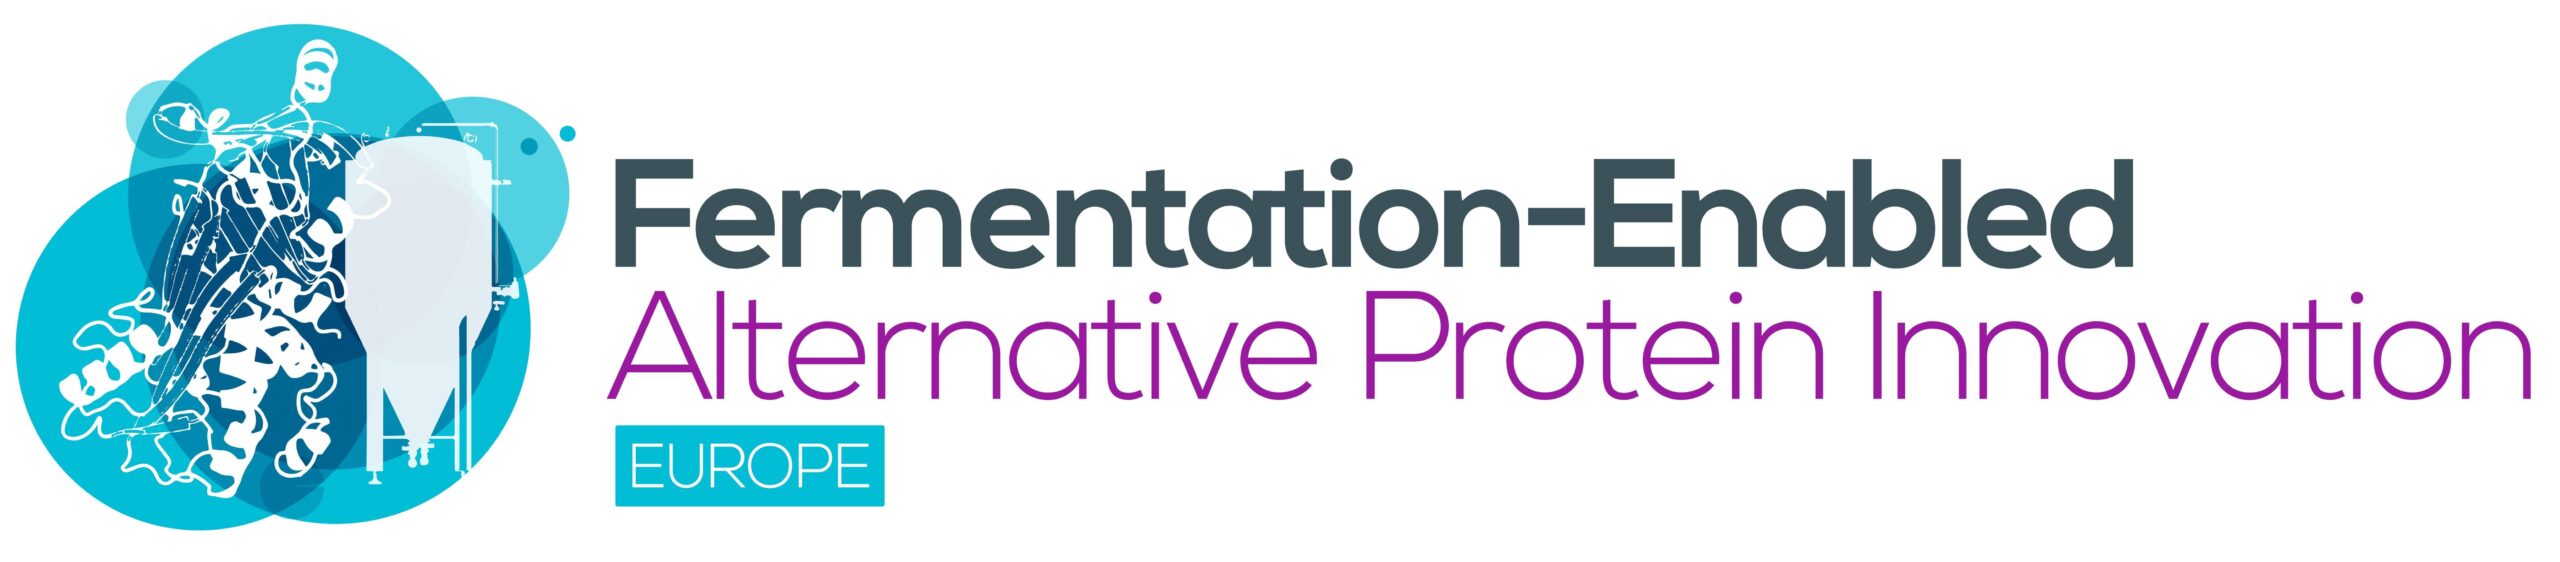 HW220202 Fermentation-Enabled Alternative Protein Innovation Europe logo FINAL (1)